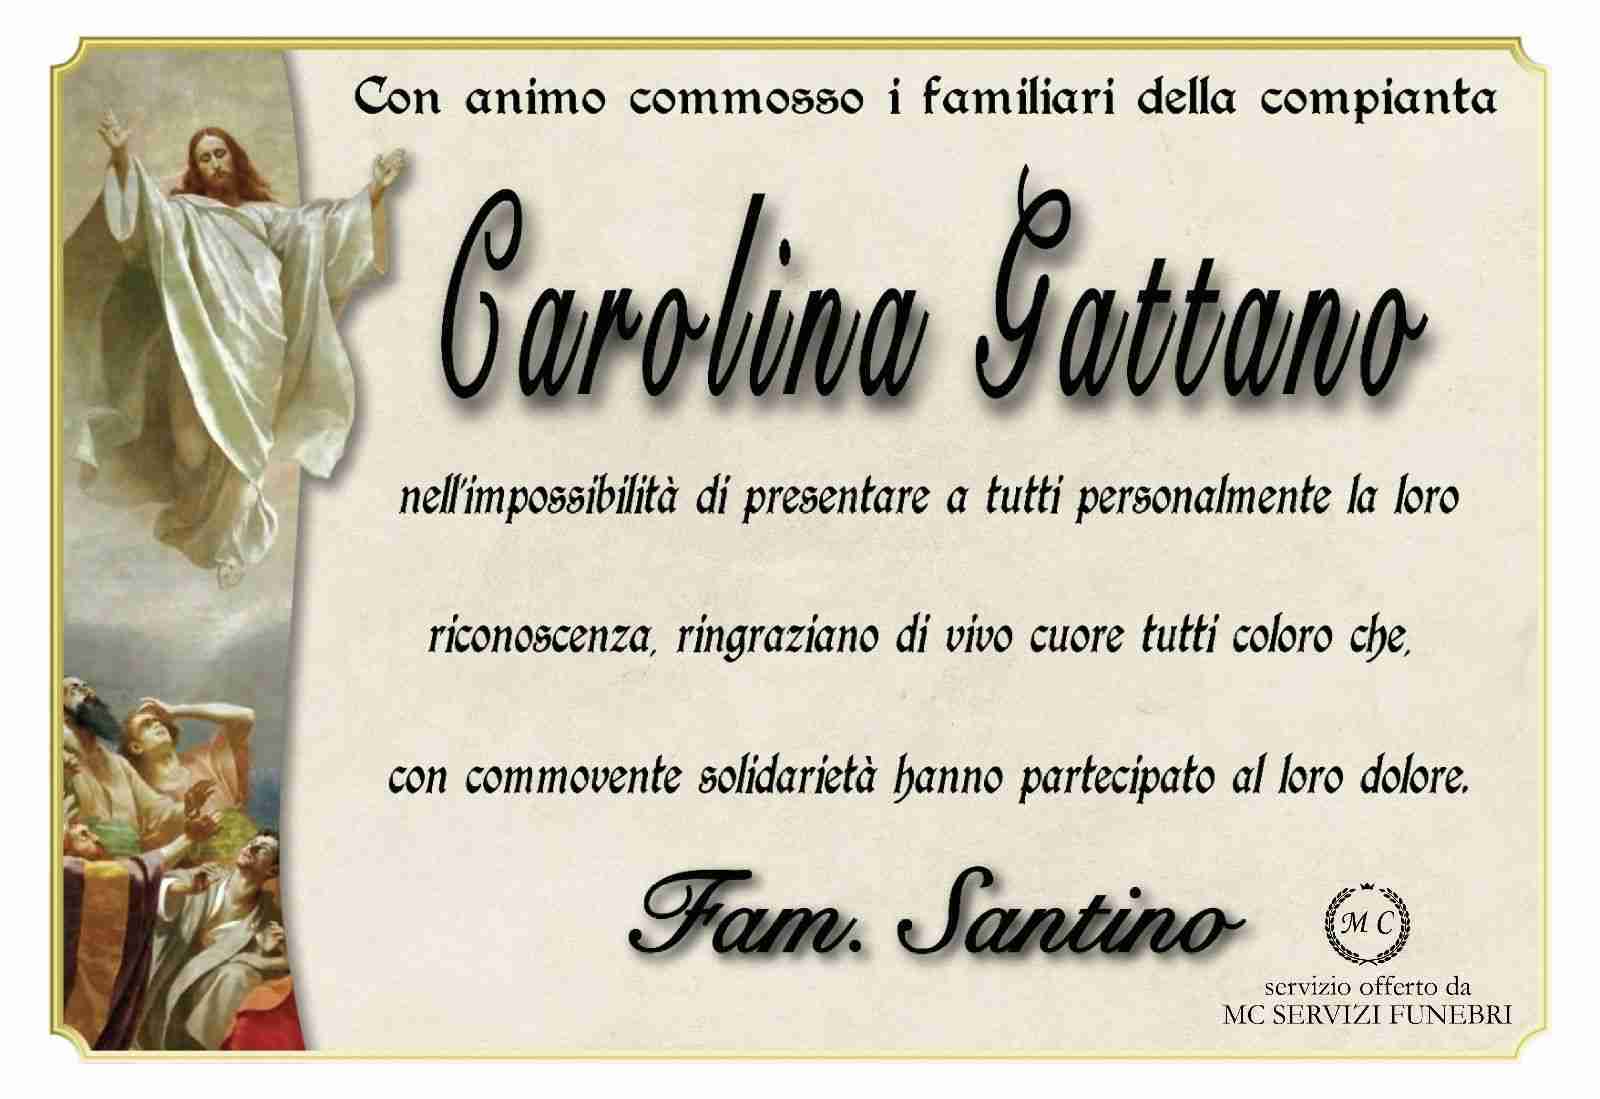 Carolina Gattano